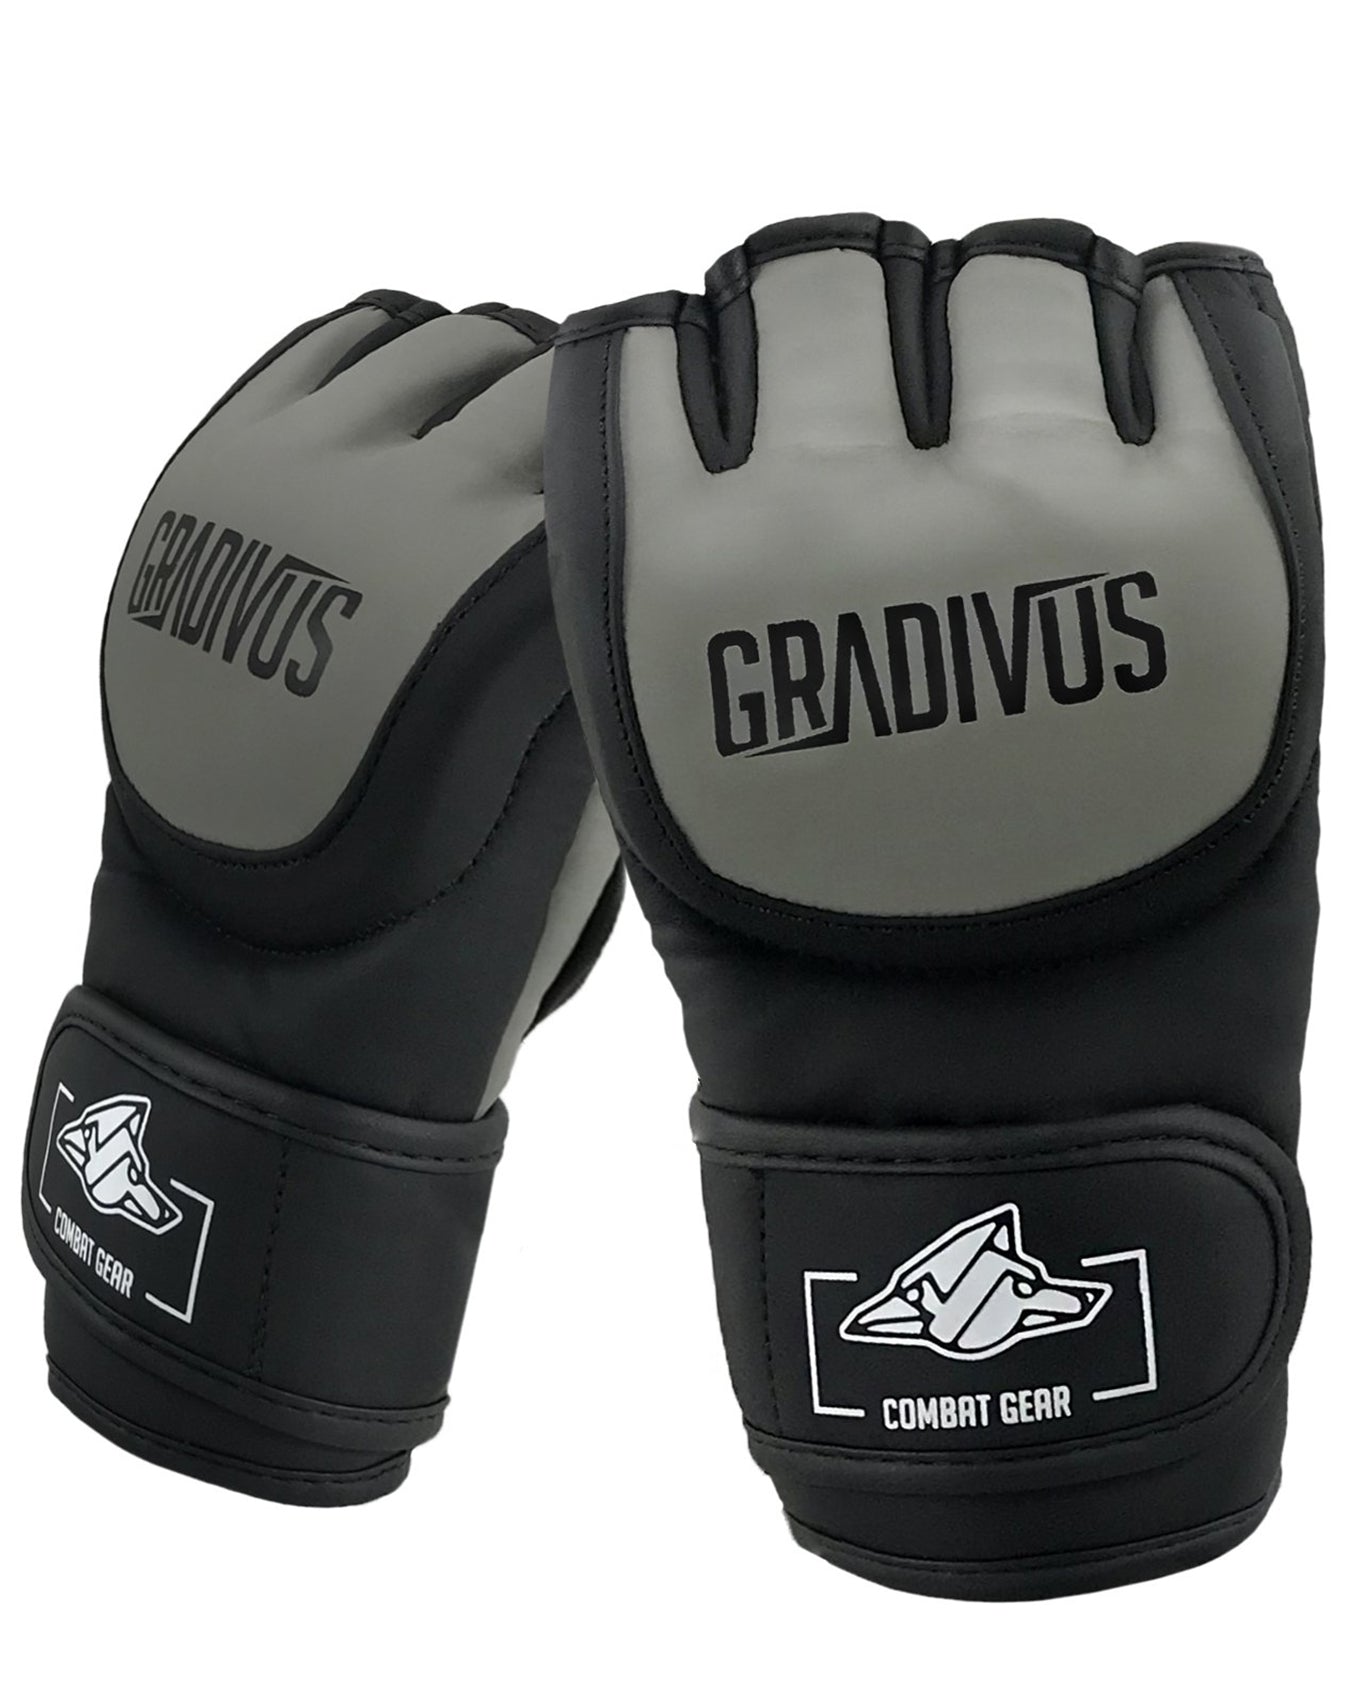 Vendas Boxeo GRADIVUS – GRADIVUS Combat Gear